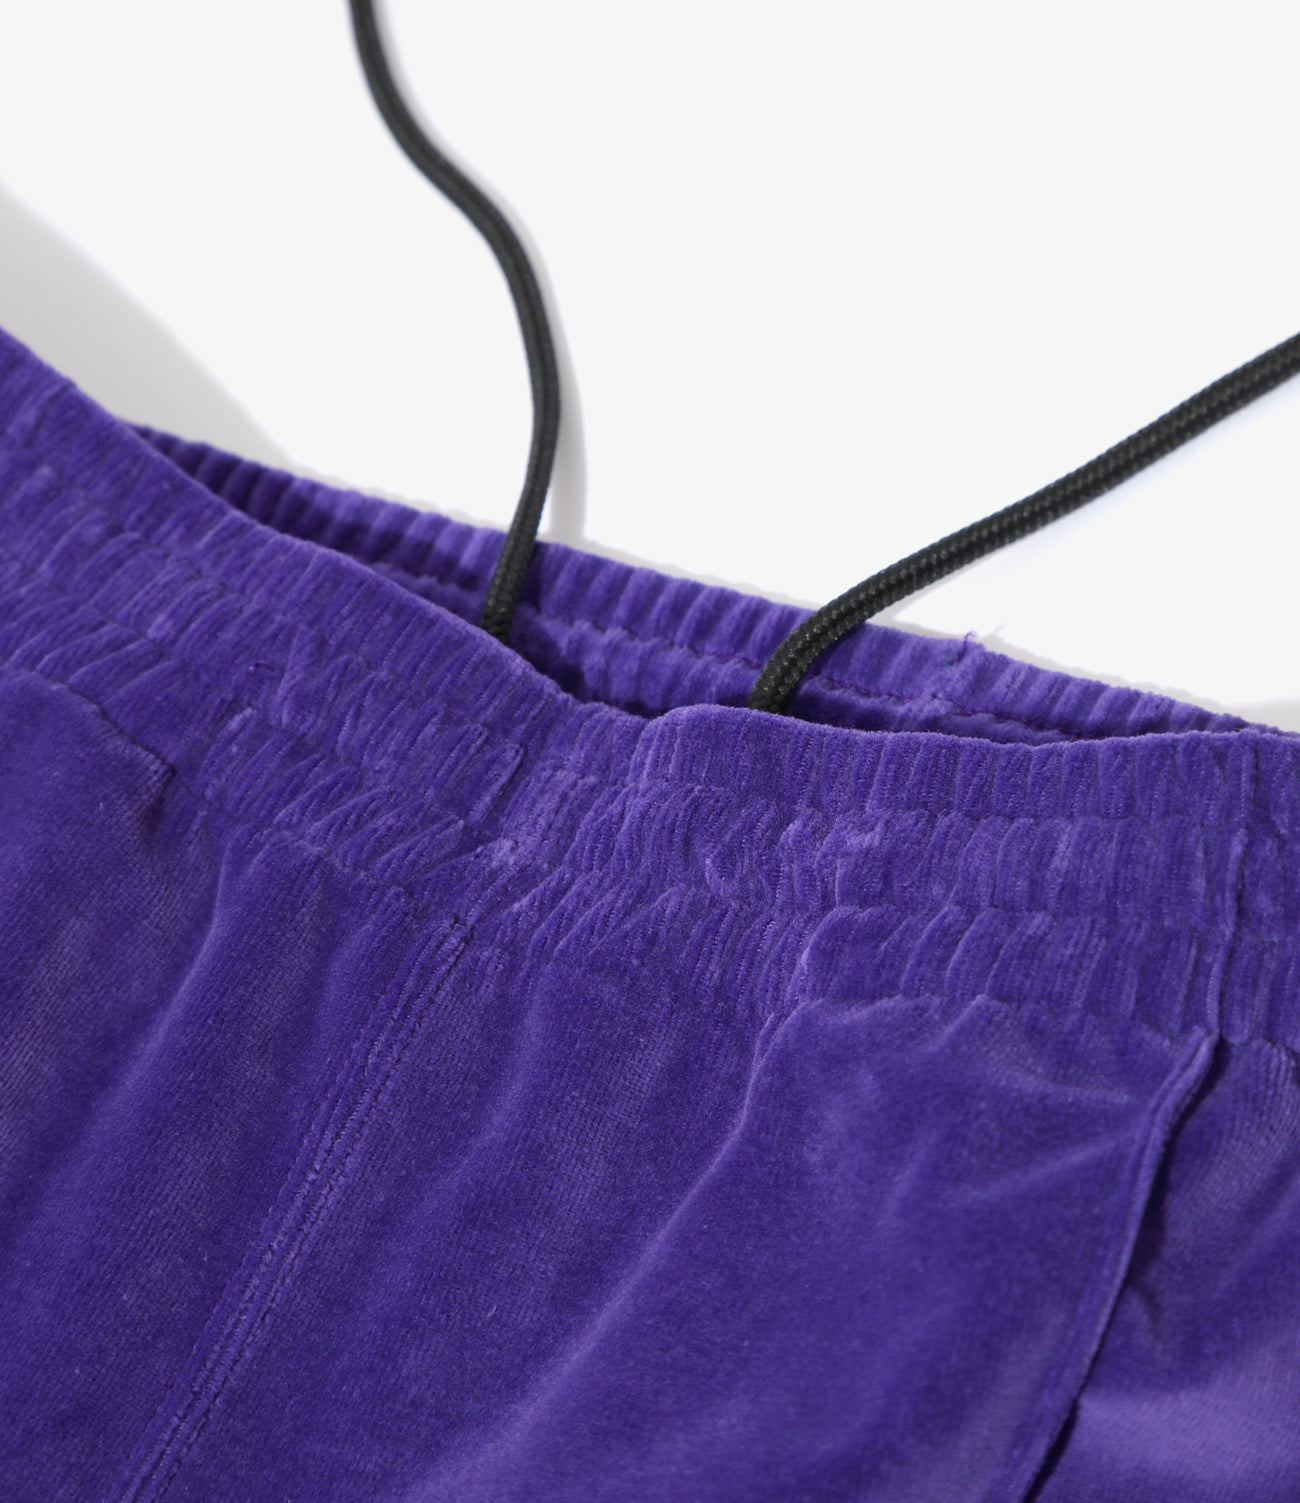 Needles Velour Narrow Track Pants Purple (C) – TheLaboratoryOKC